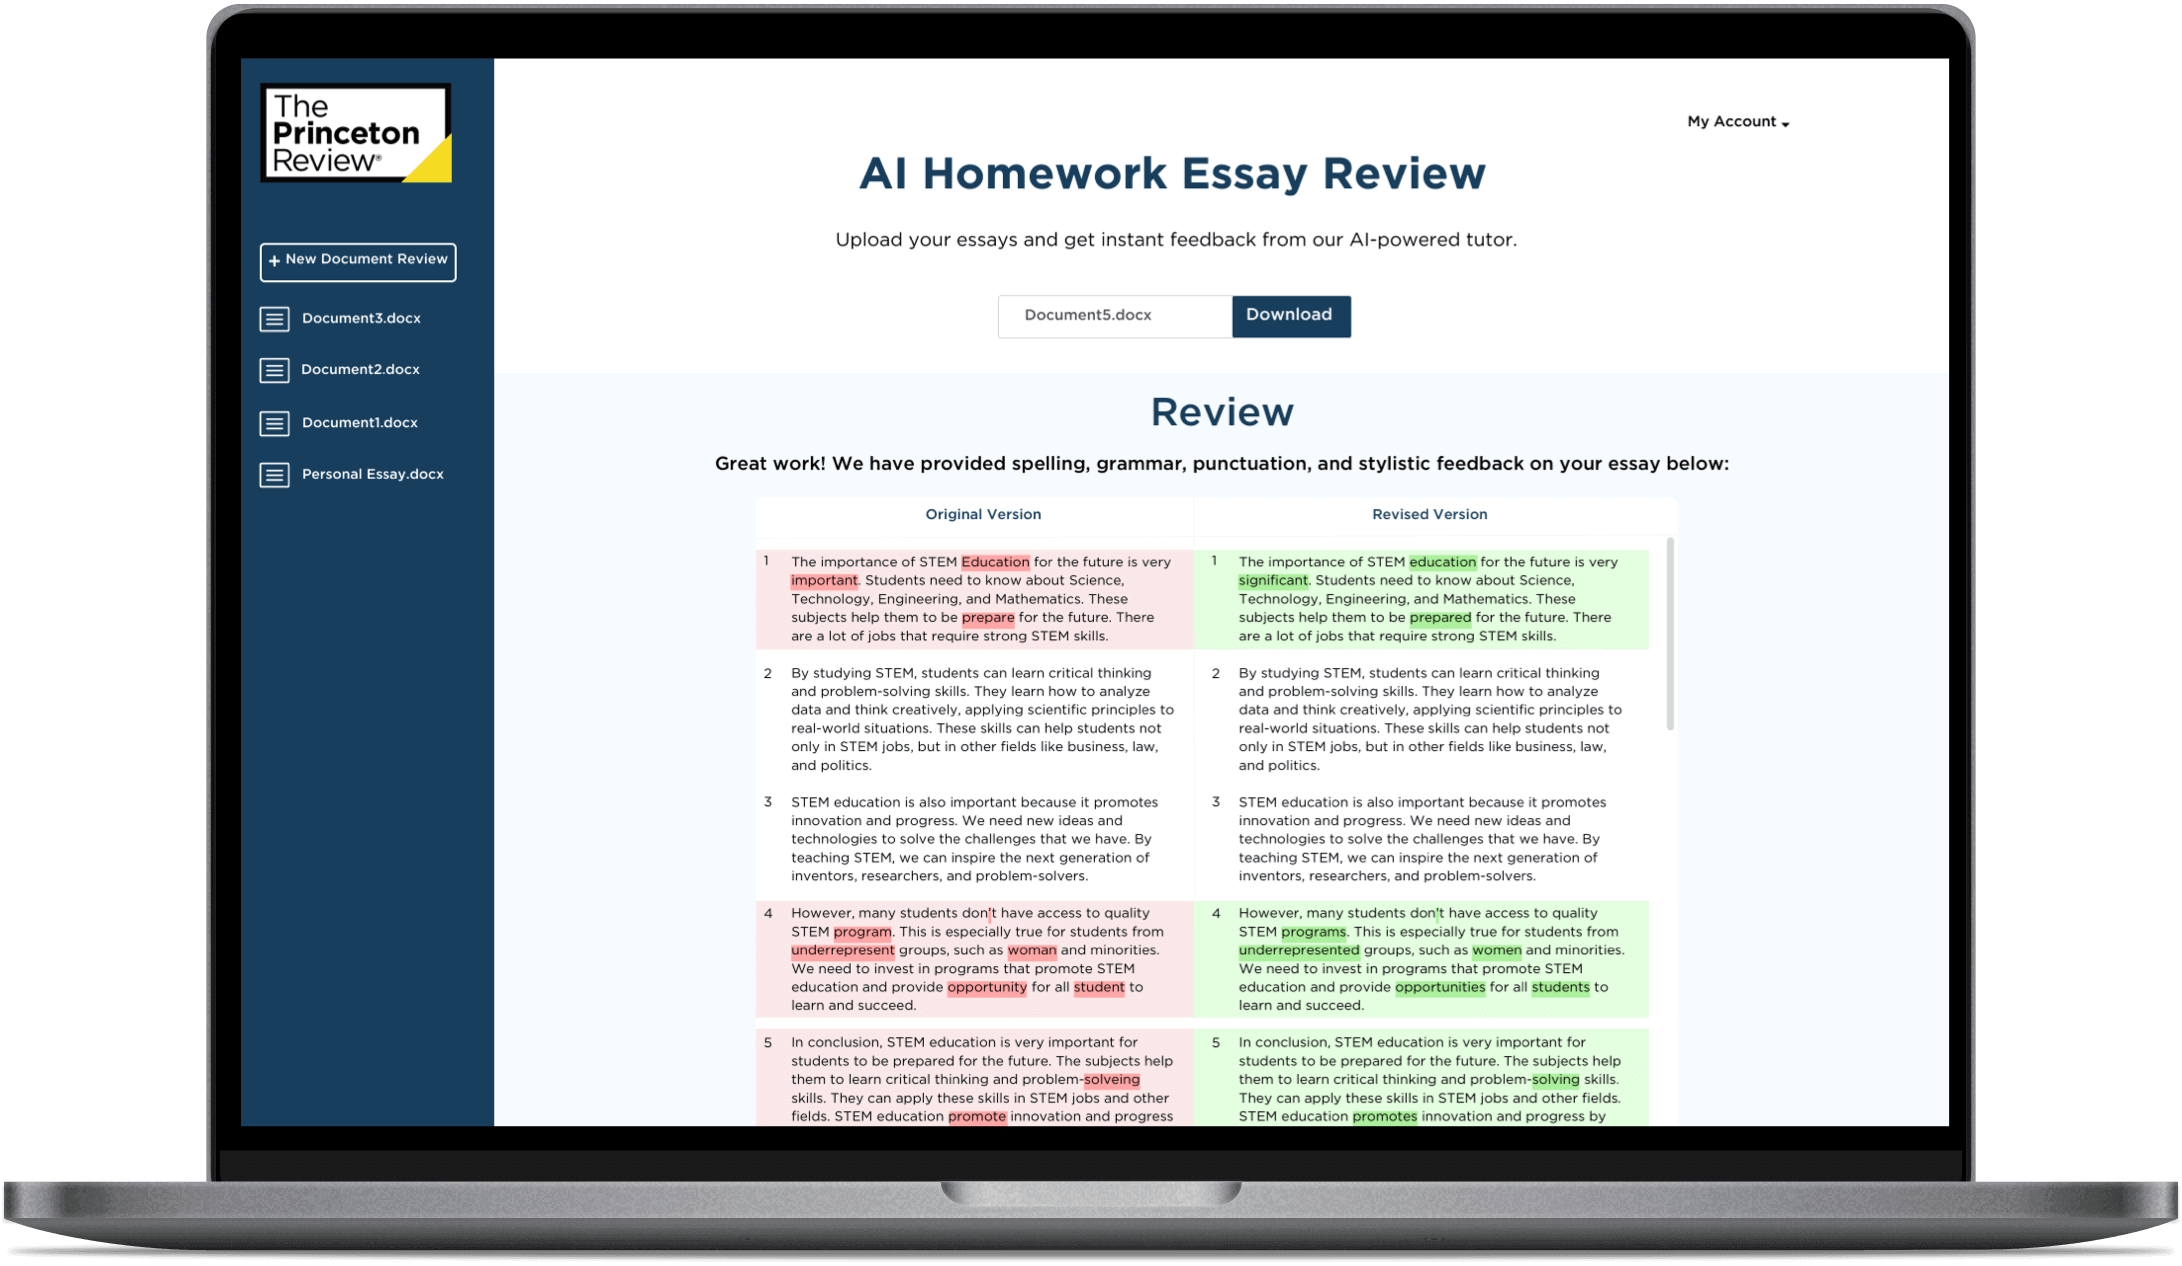 essay feedback website